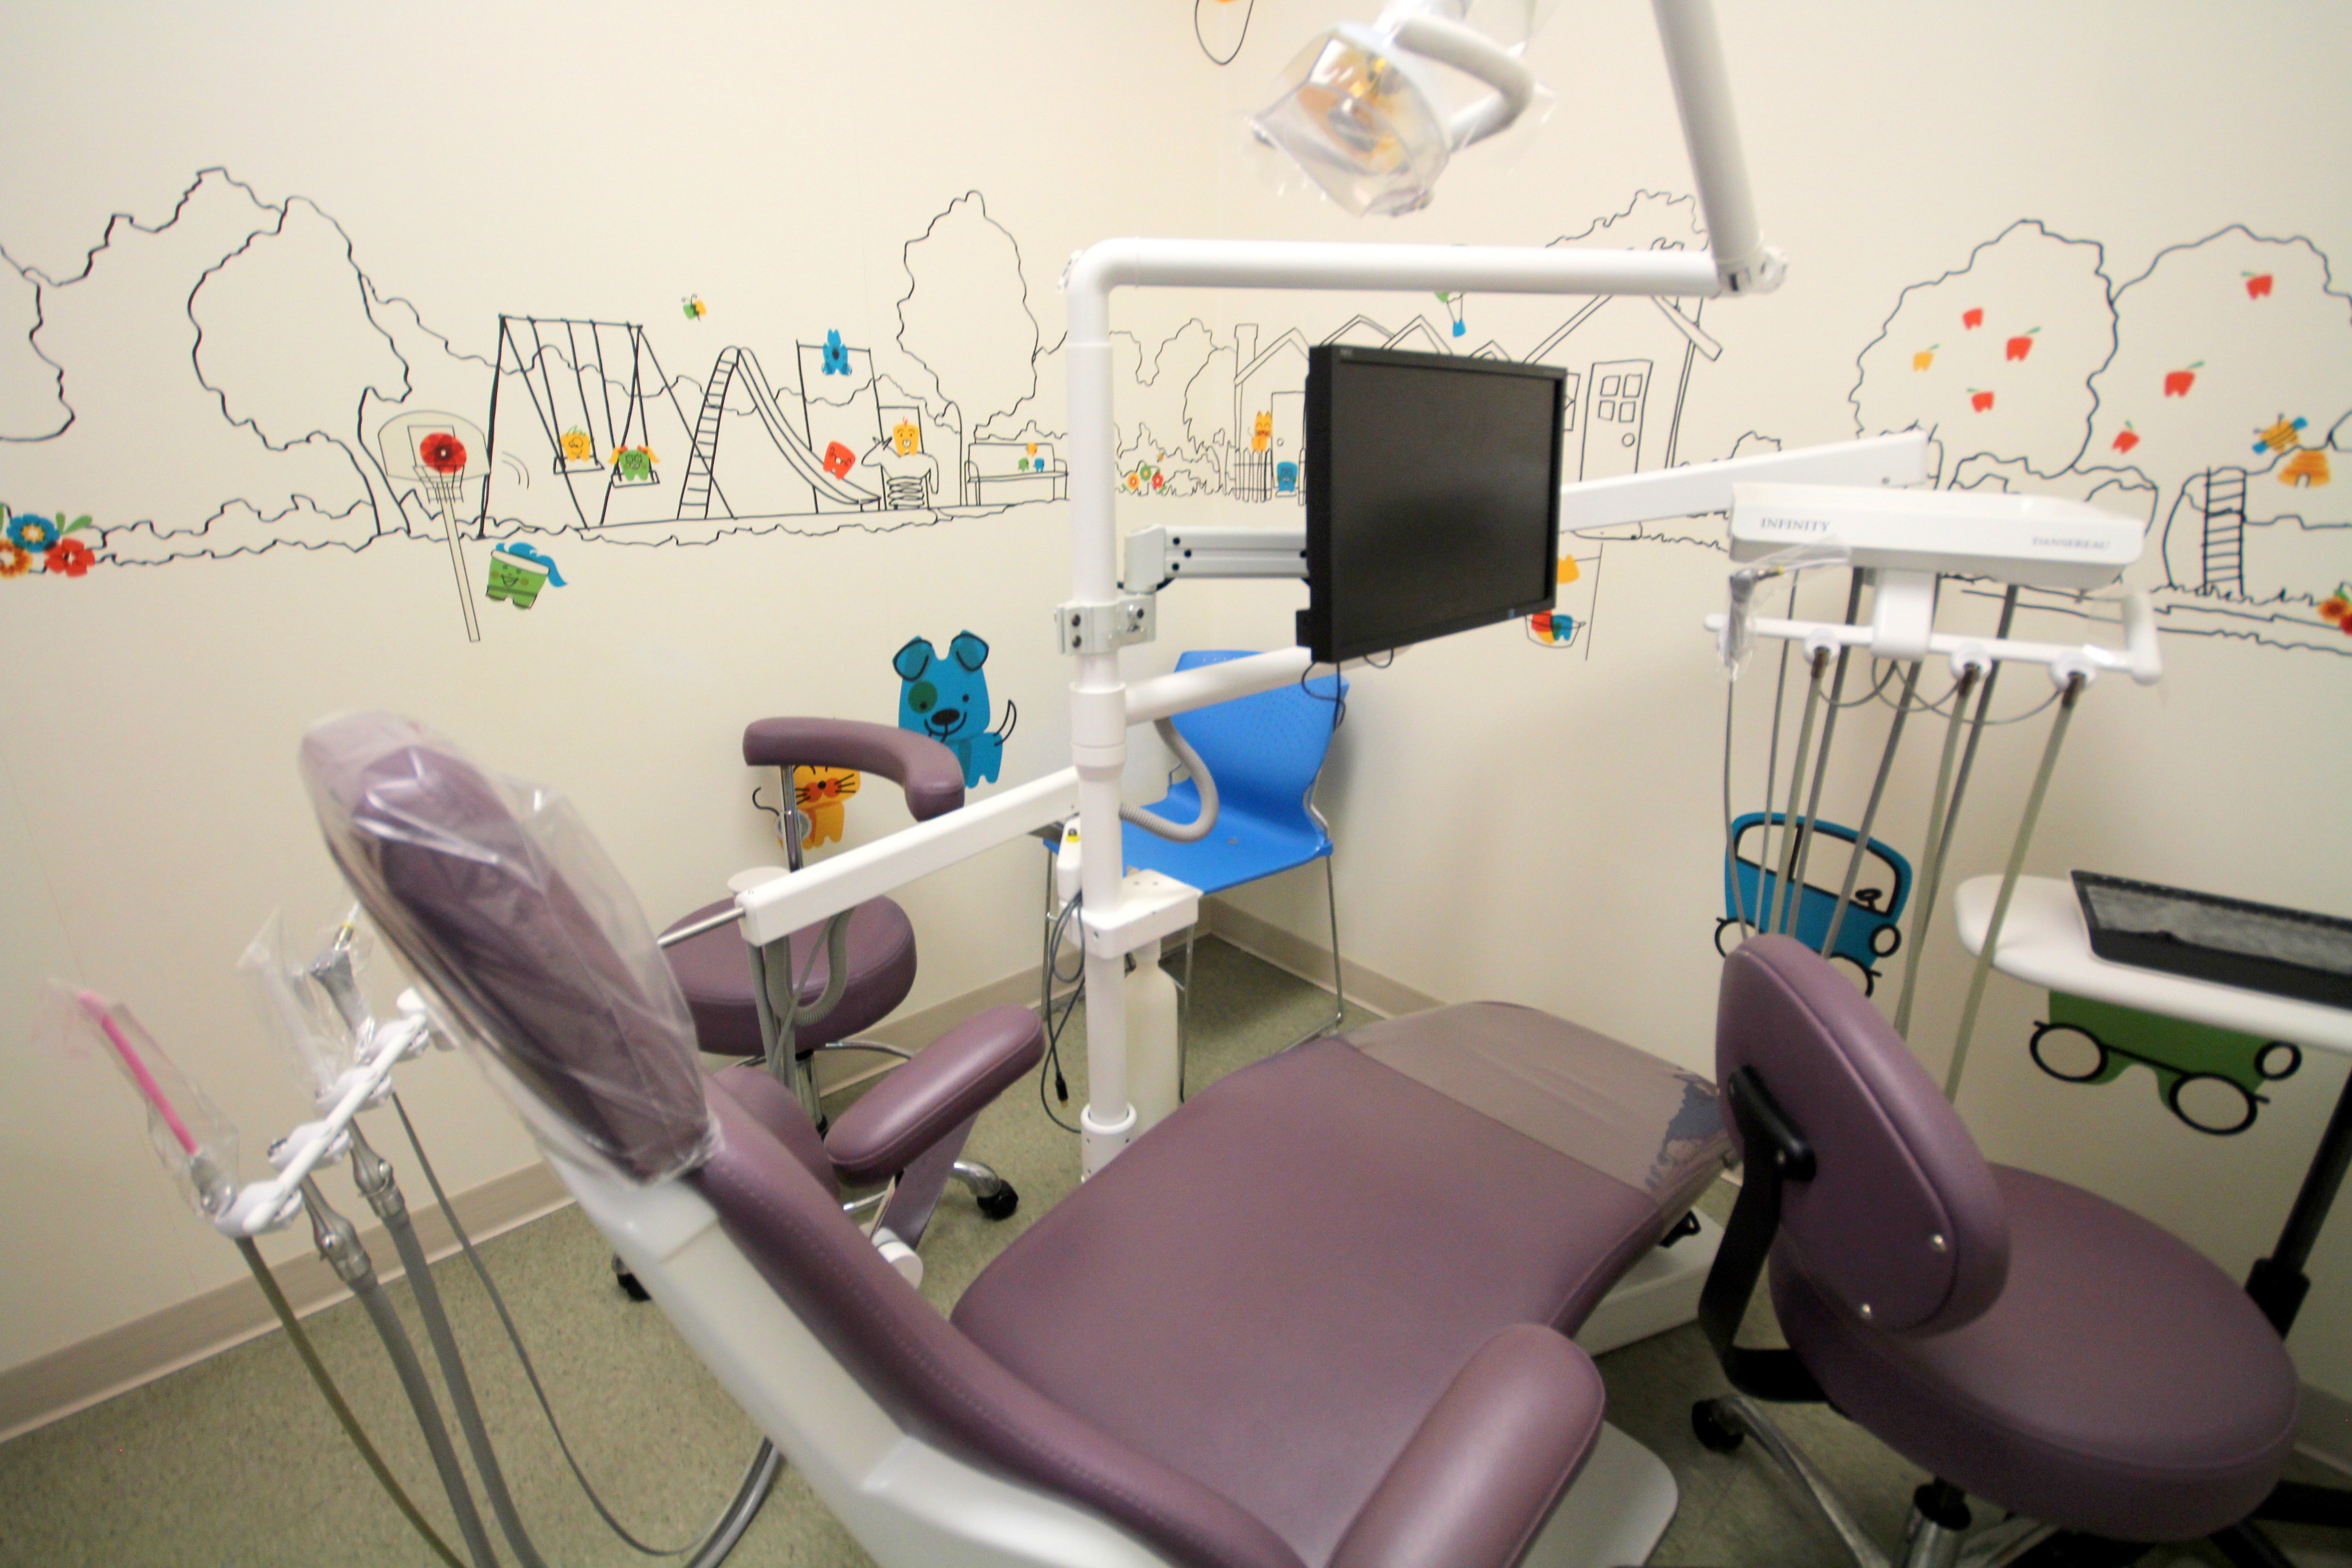 My Kid's Dentist & Orthodontics Photo